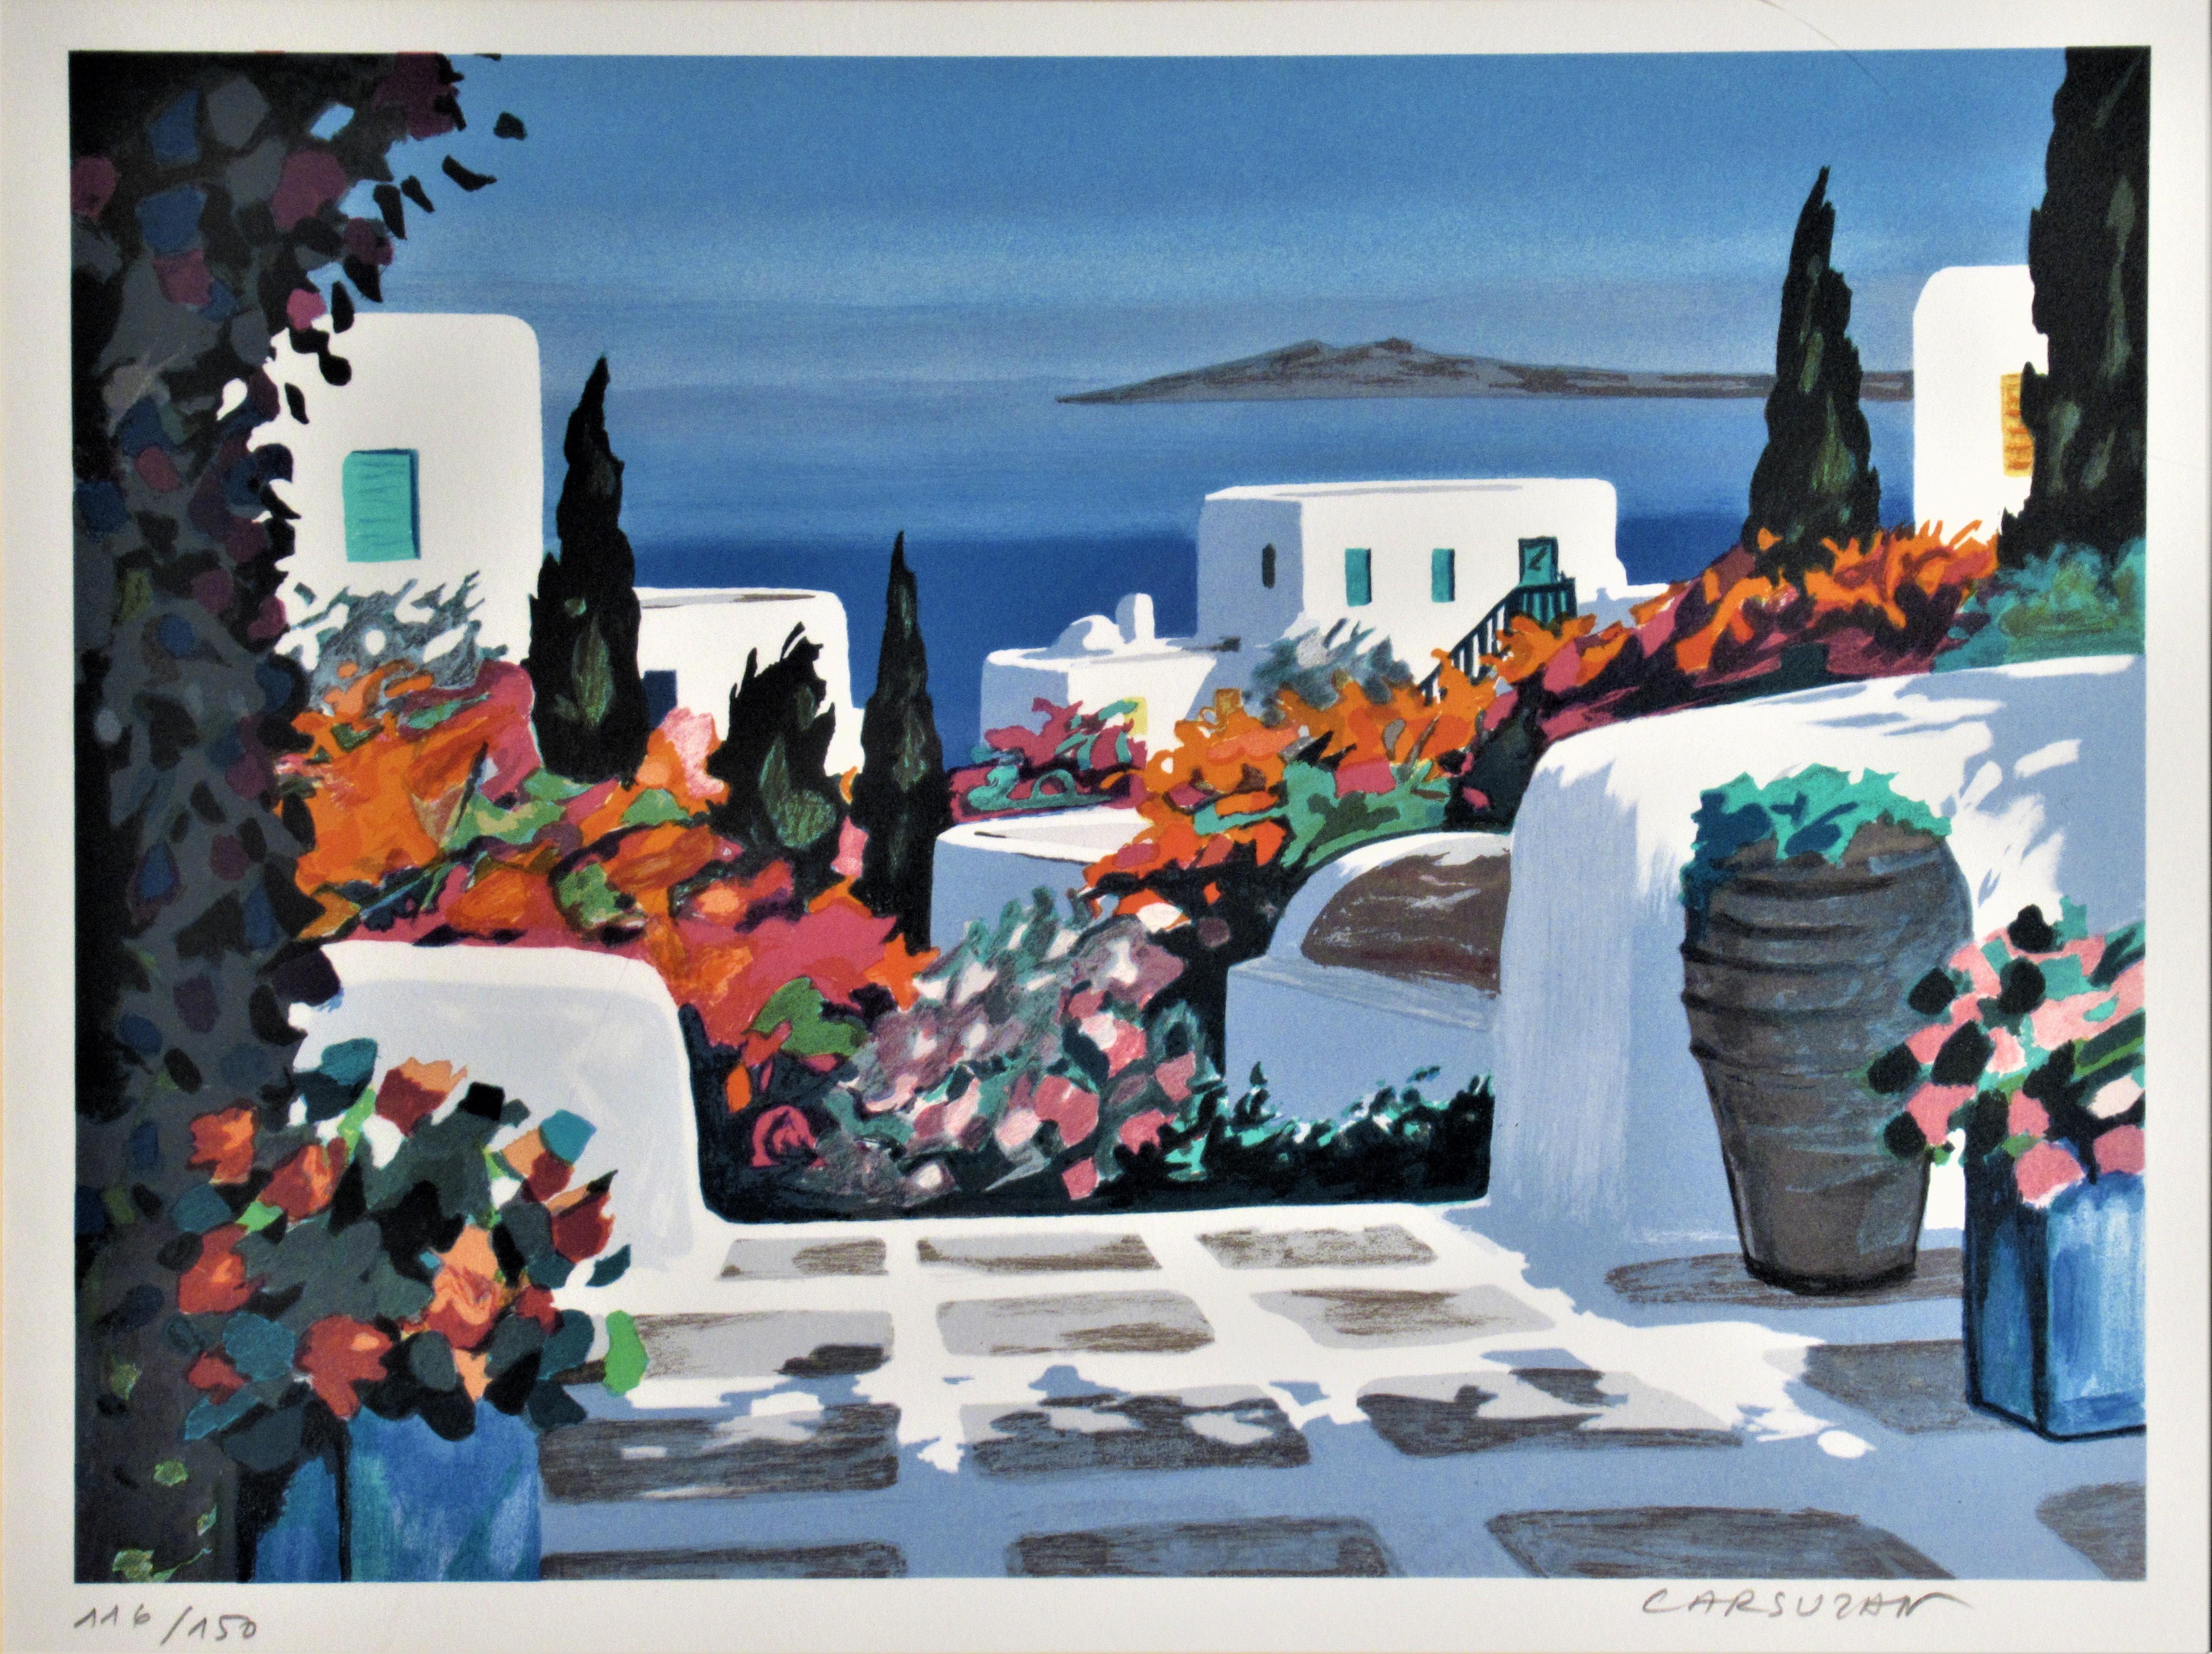 Mykonos, Greece II - Print by Jean Claude Carsuzan